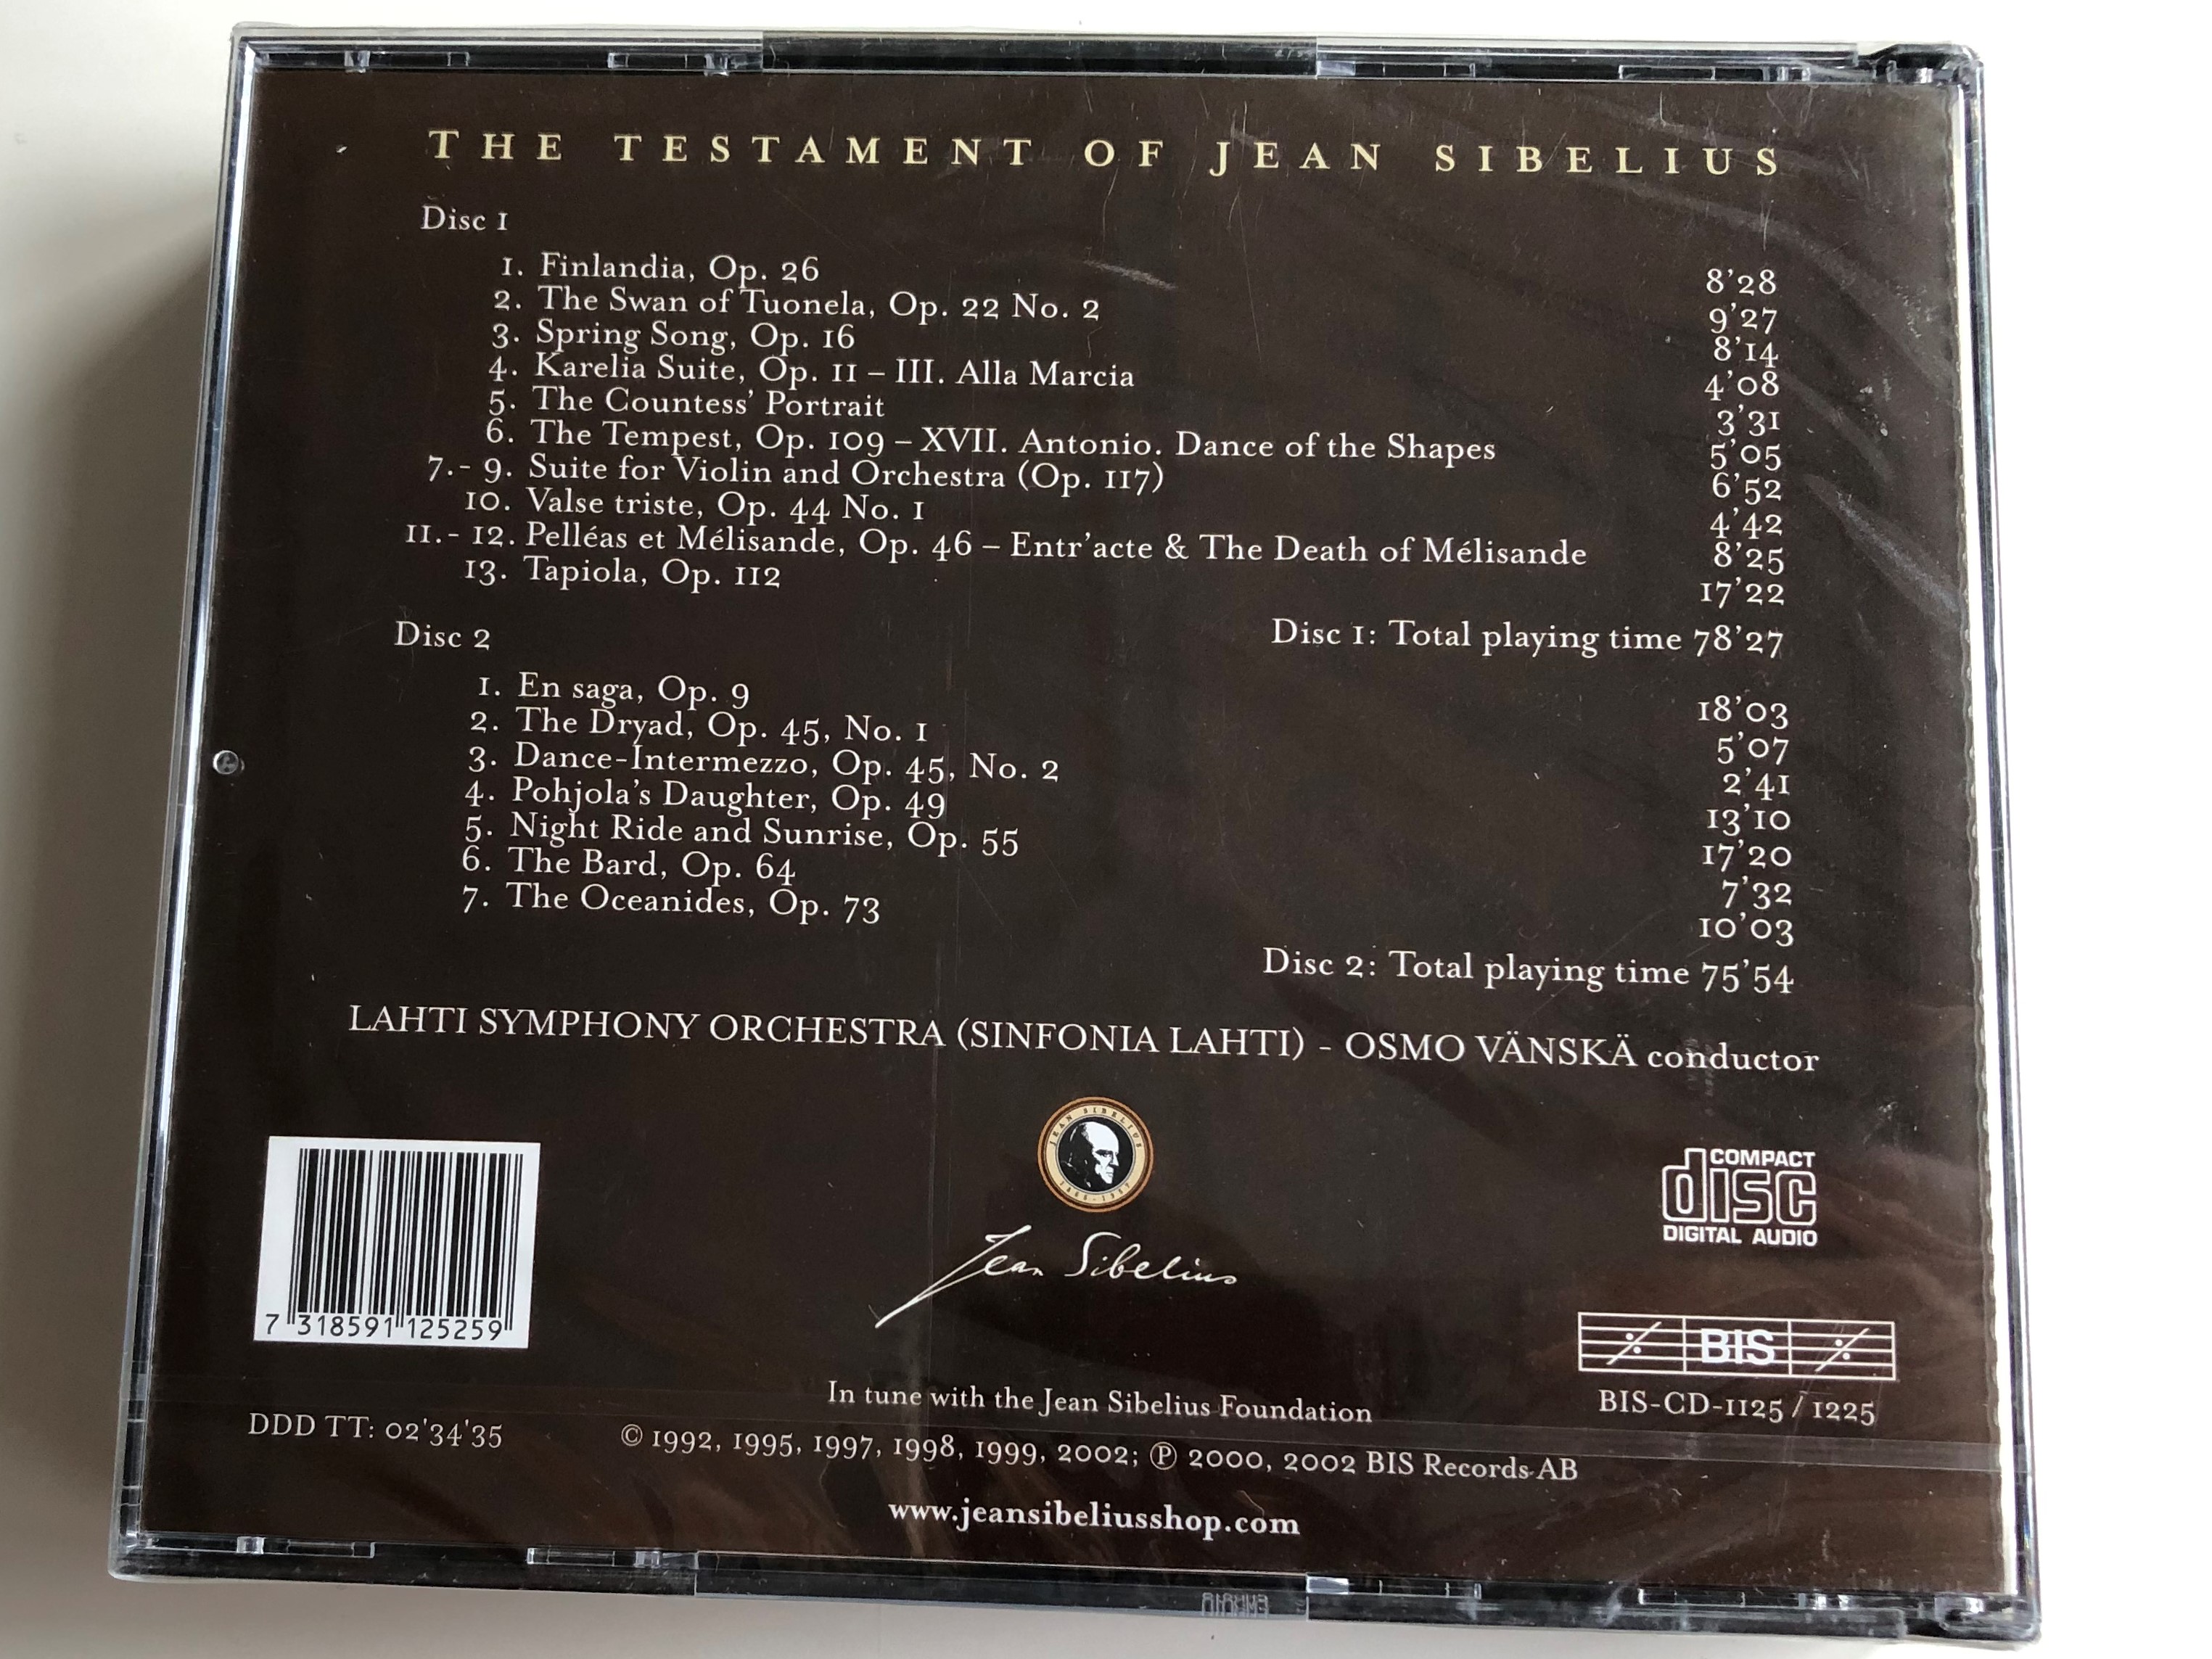 the-testament-of-jean-sibelius-bis-2x-audio-cd-2002-bis-cd-11251225-2-.jpg